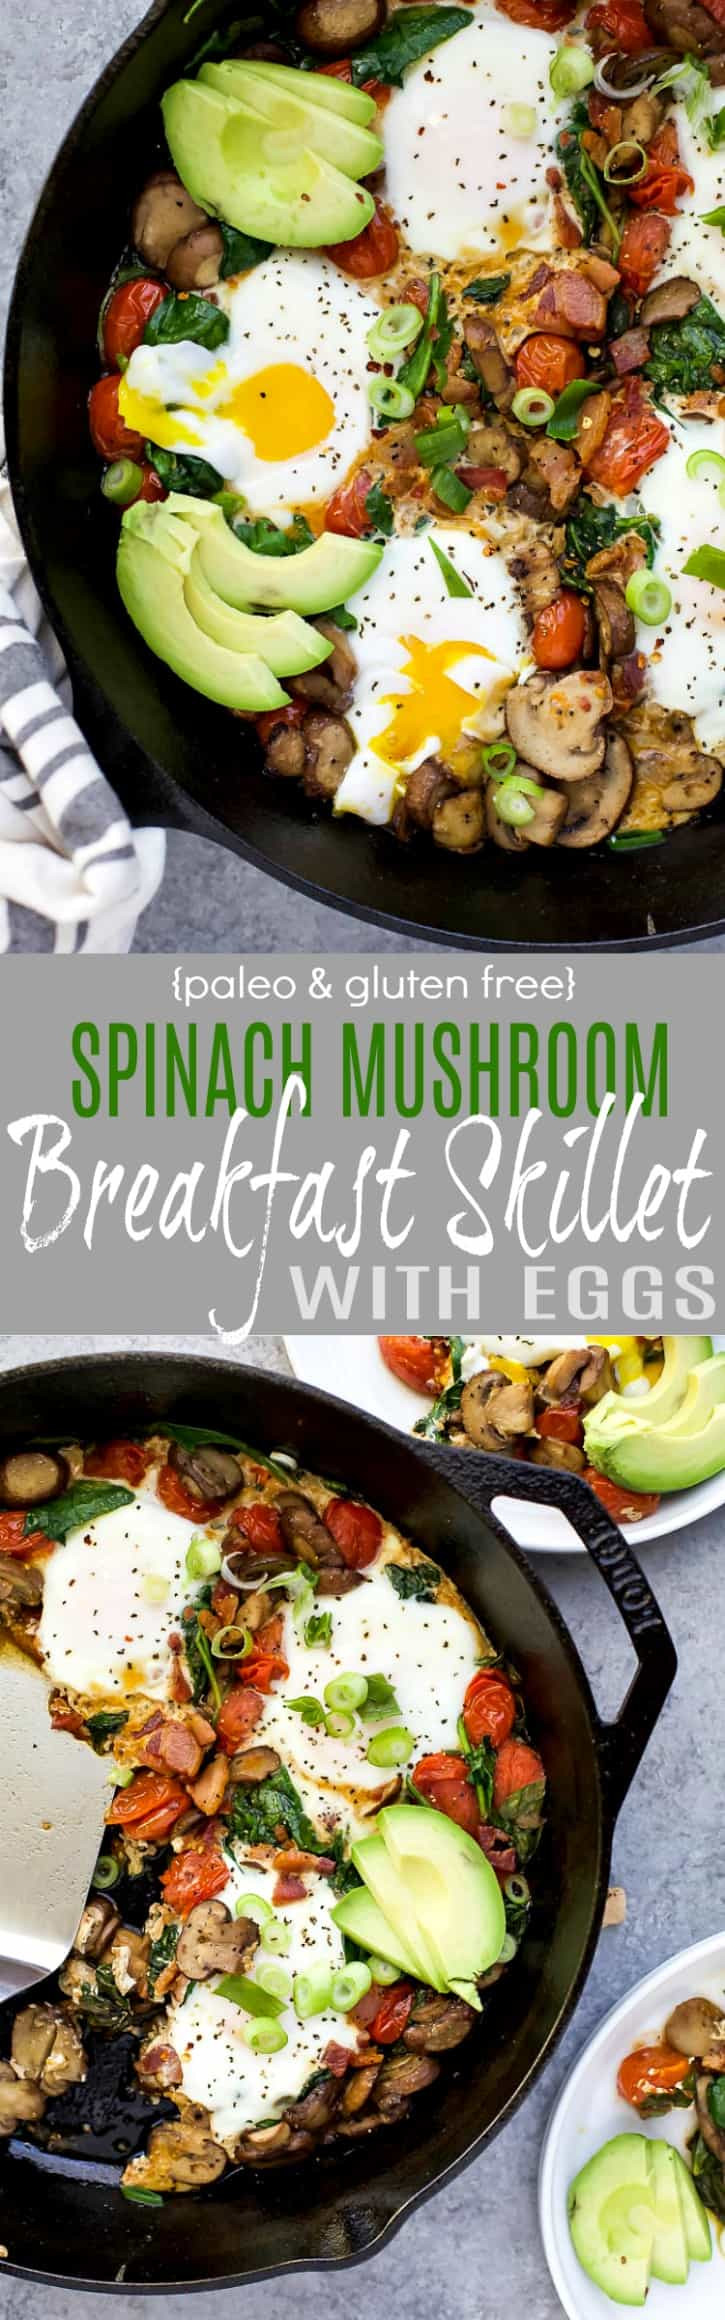 Spinach Breakfast Recipes
 Spinach Mushroom Breakfast Skillet with Eggs